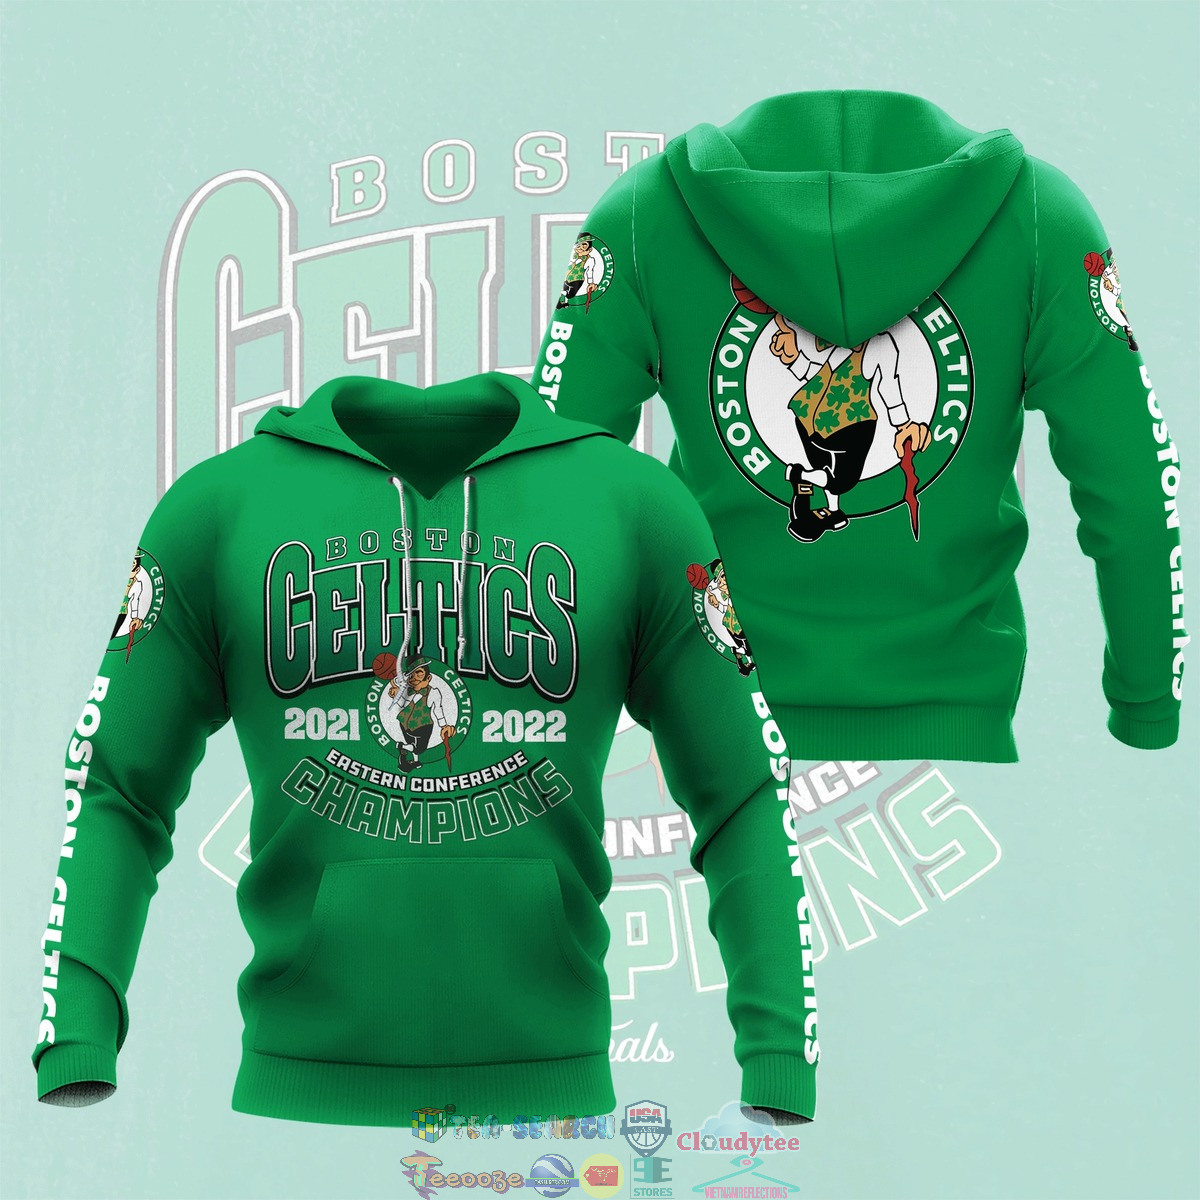 Boston Celtics 2021 2022 Eastern Conferrence Champions Green 3D hoodie and t-shirt – Saleoff